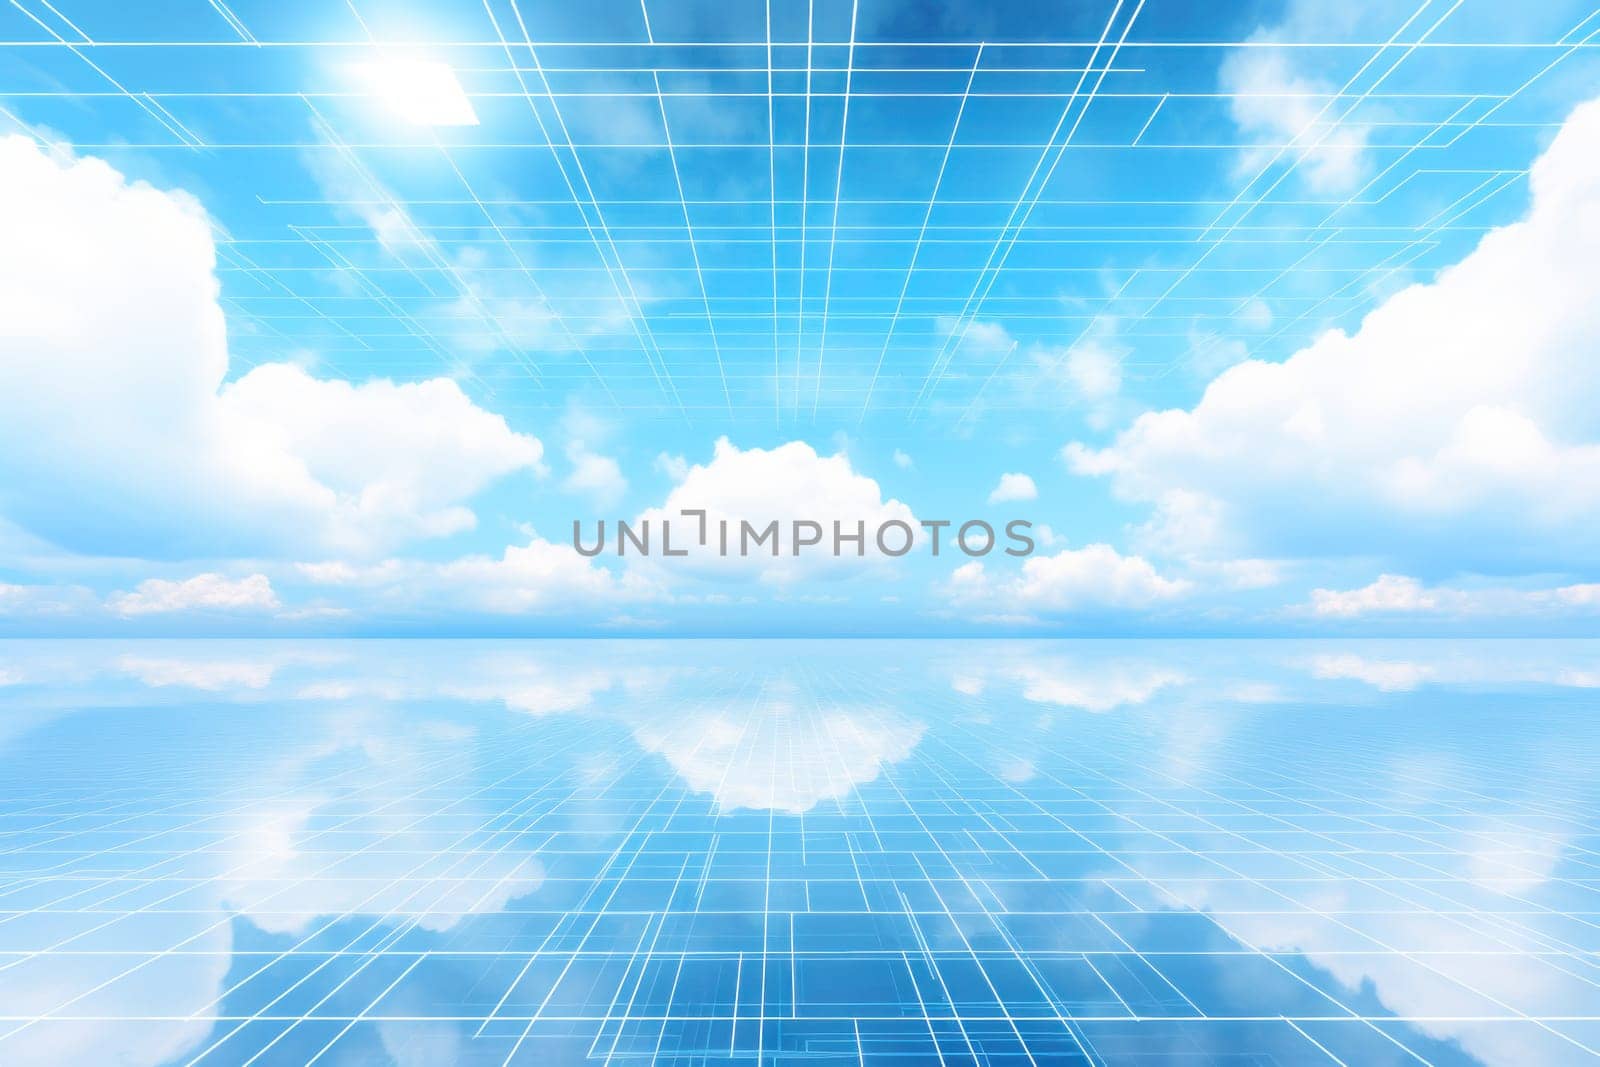 Digital matrix theme light blue sky and clouds backgrounds by nijieimu